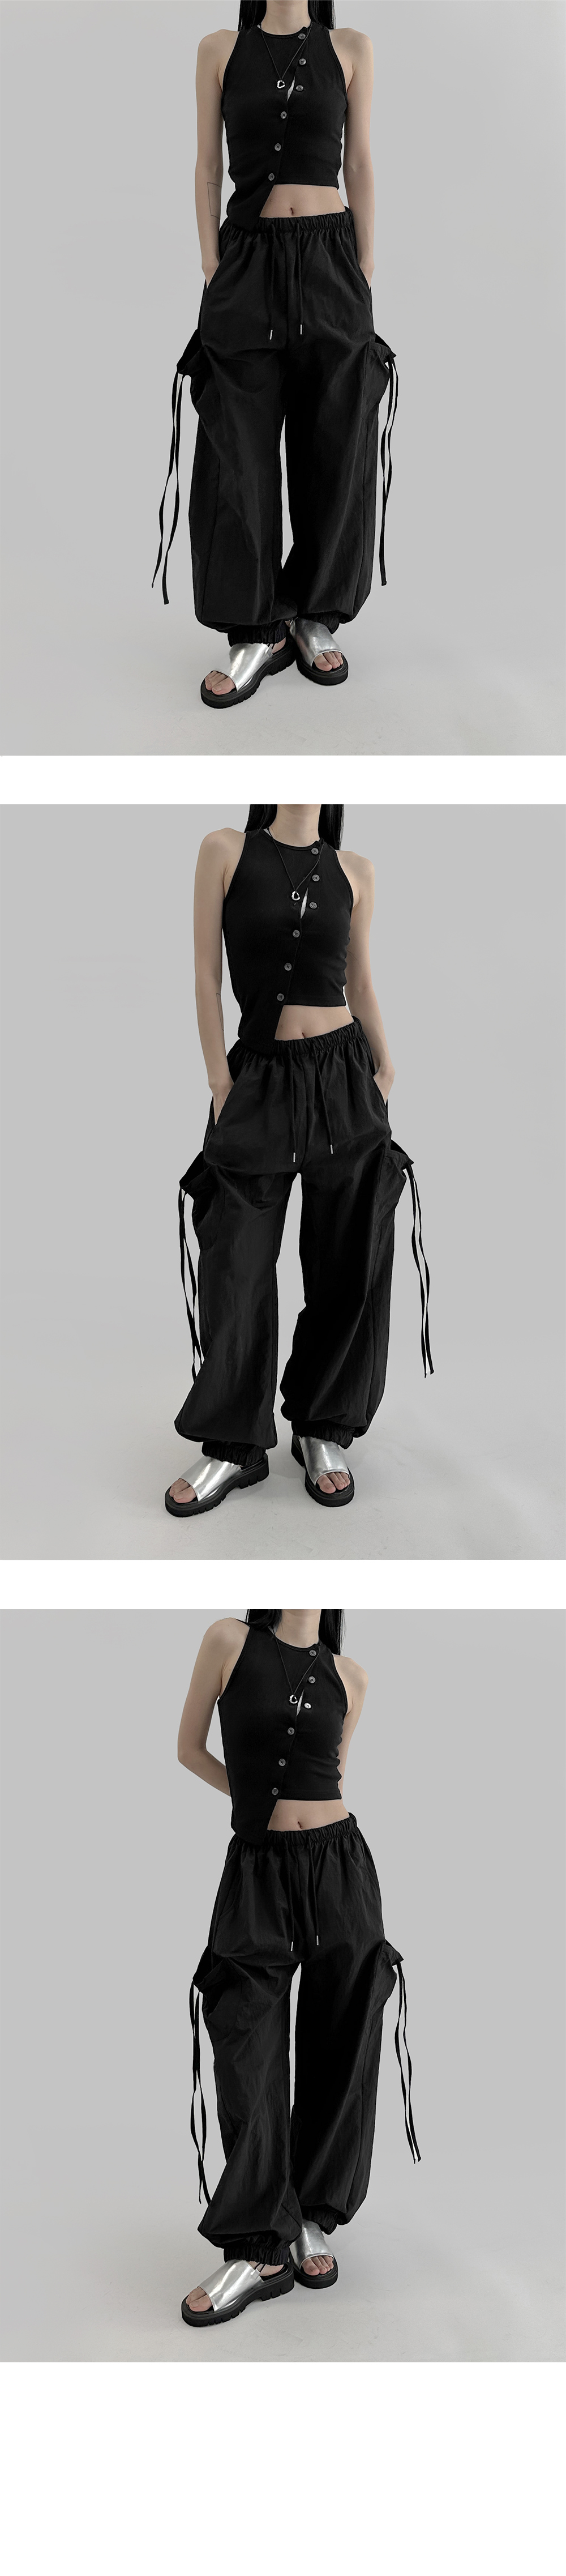 suspenders skirt/pants charcoal color image-S2L1